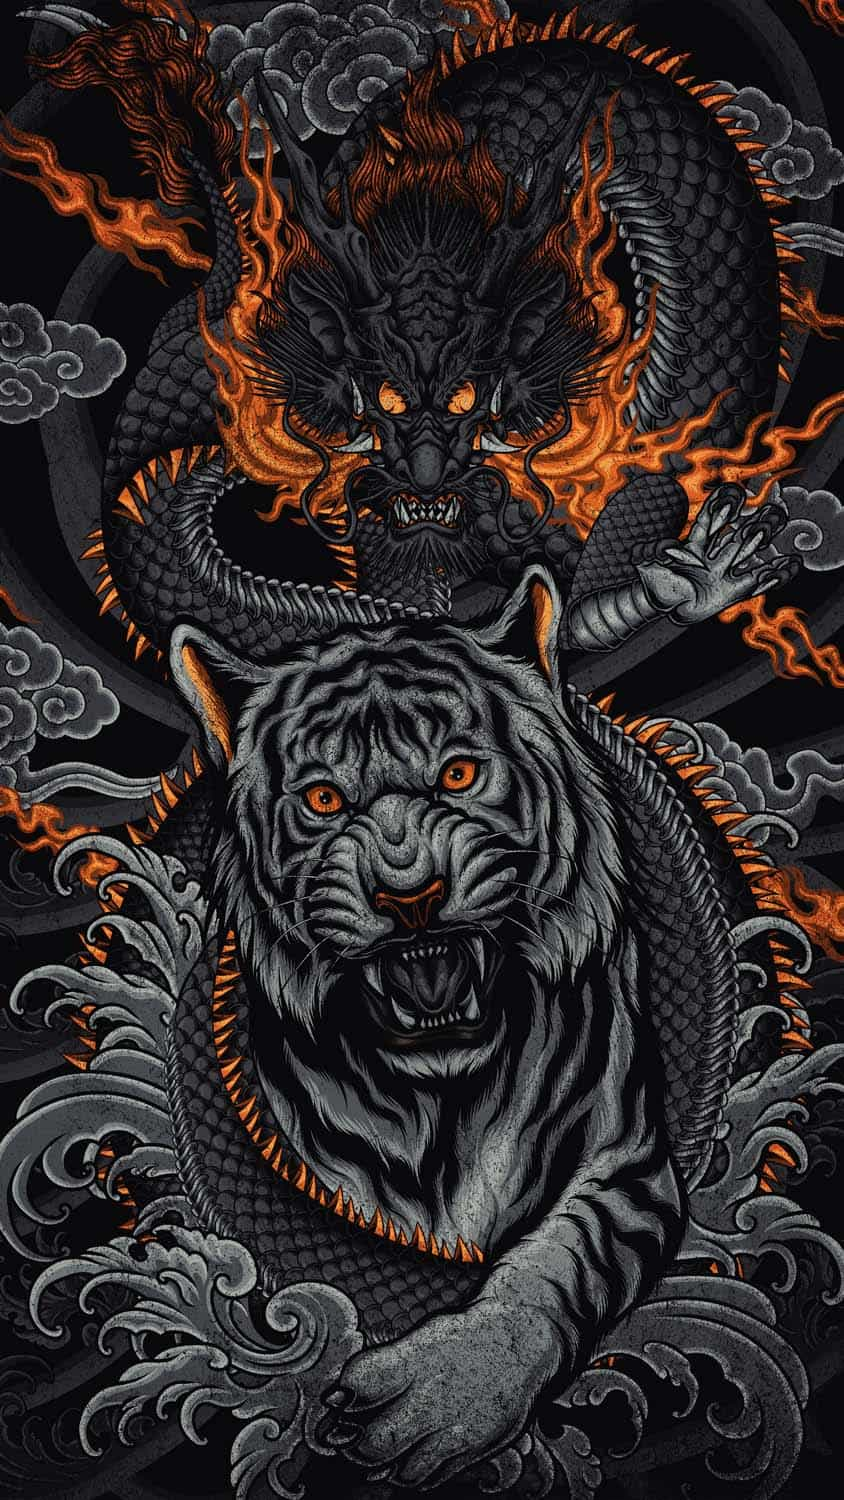 Dragon Vs Tiger IPhone Wallpaper HD  IPhone Wallpapers